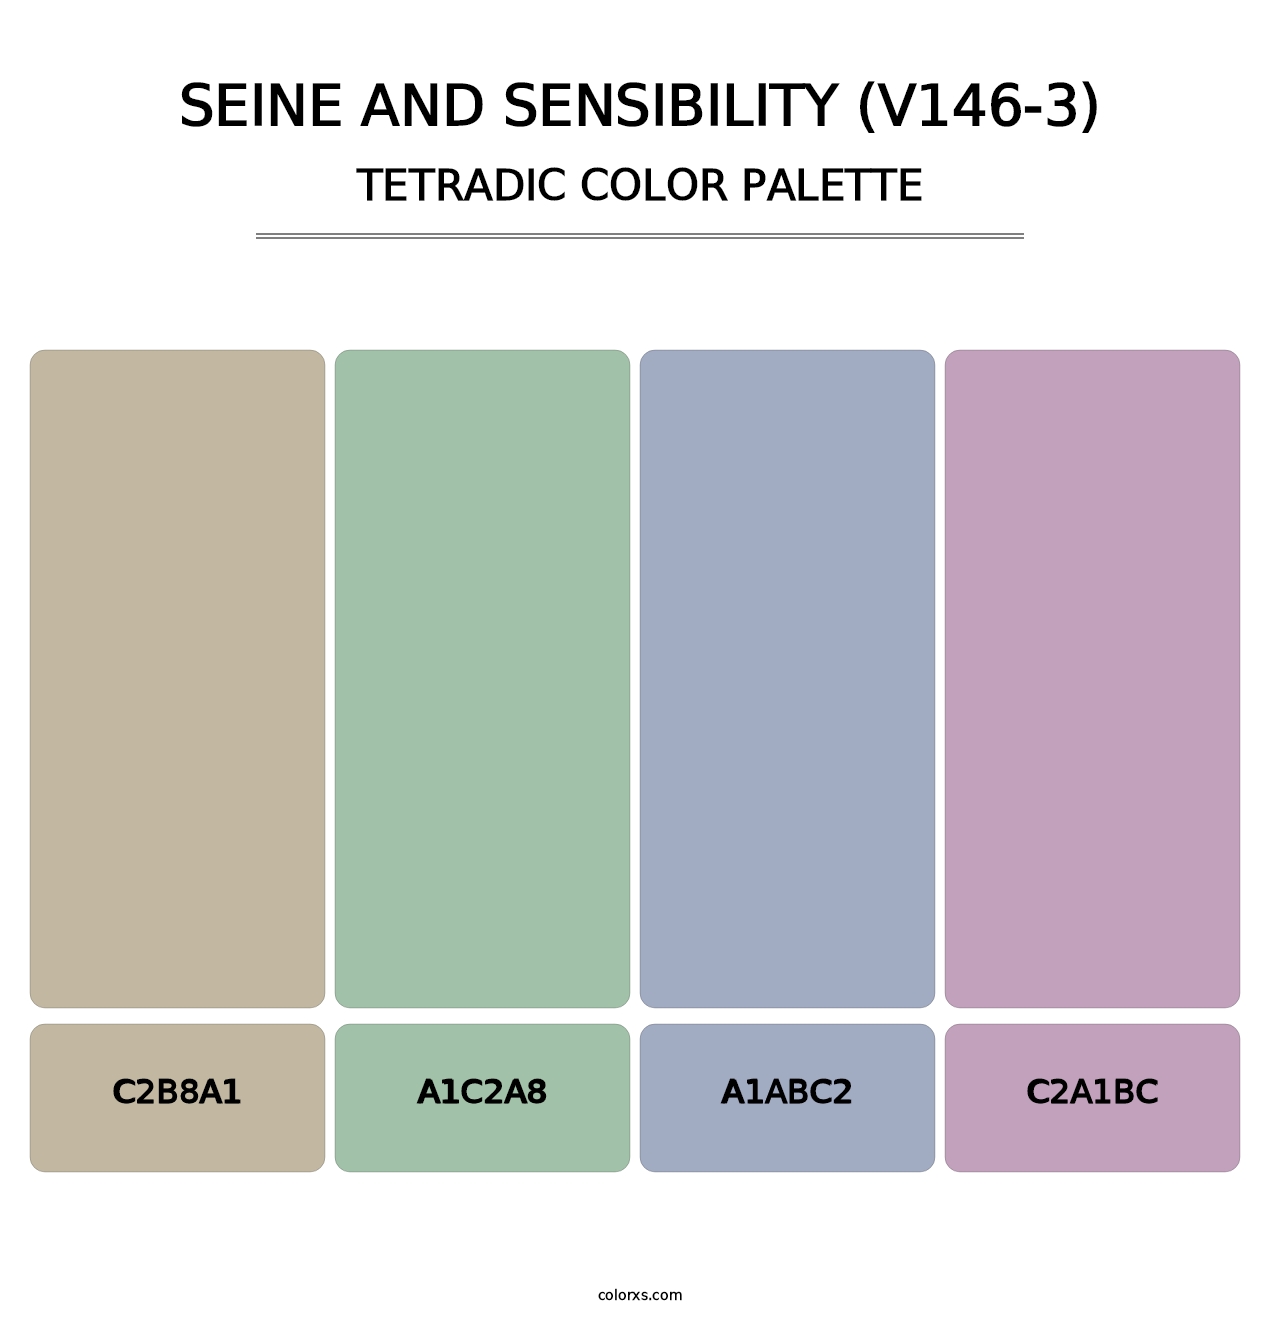 Seine and Sensibility (V146-3) - Tetradic Color Palette